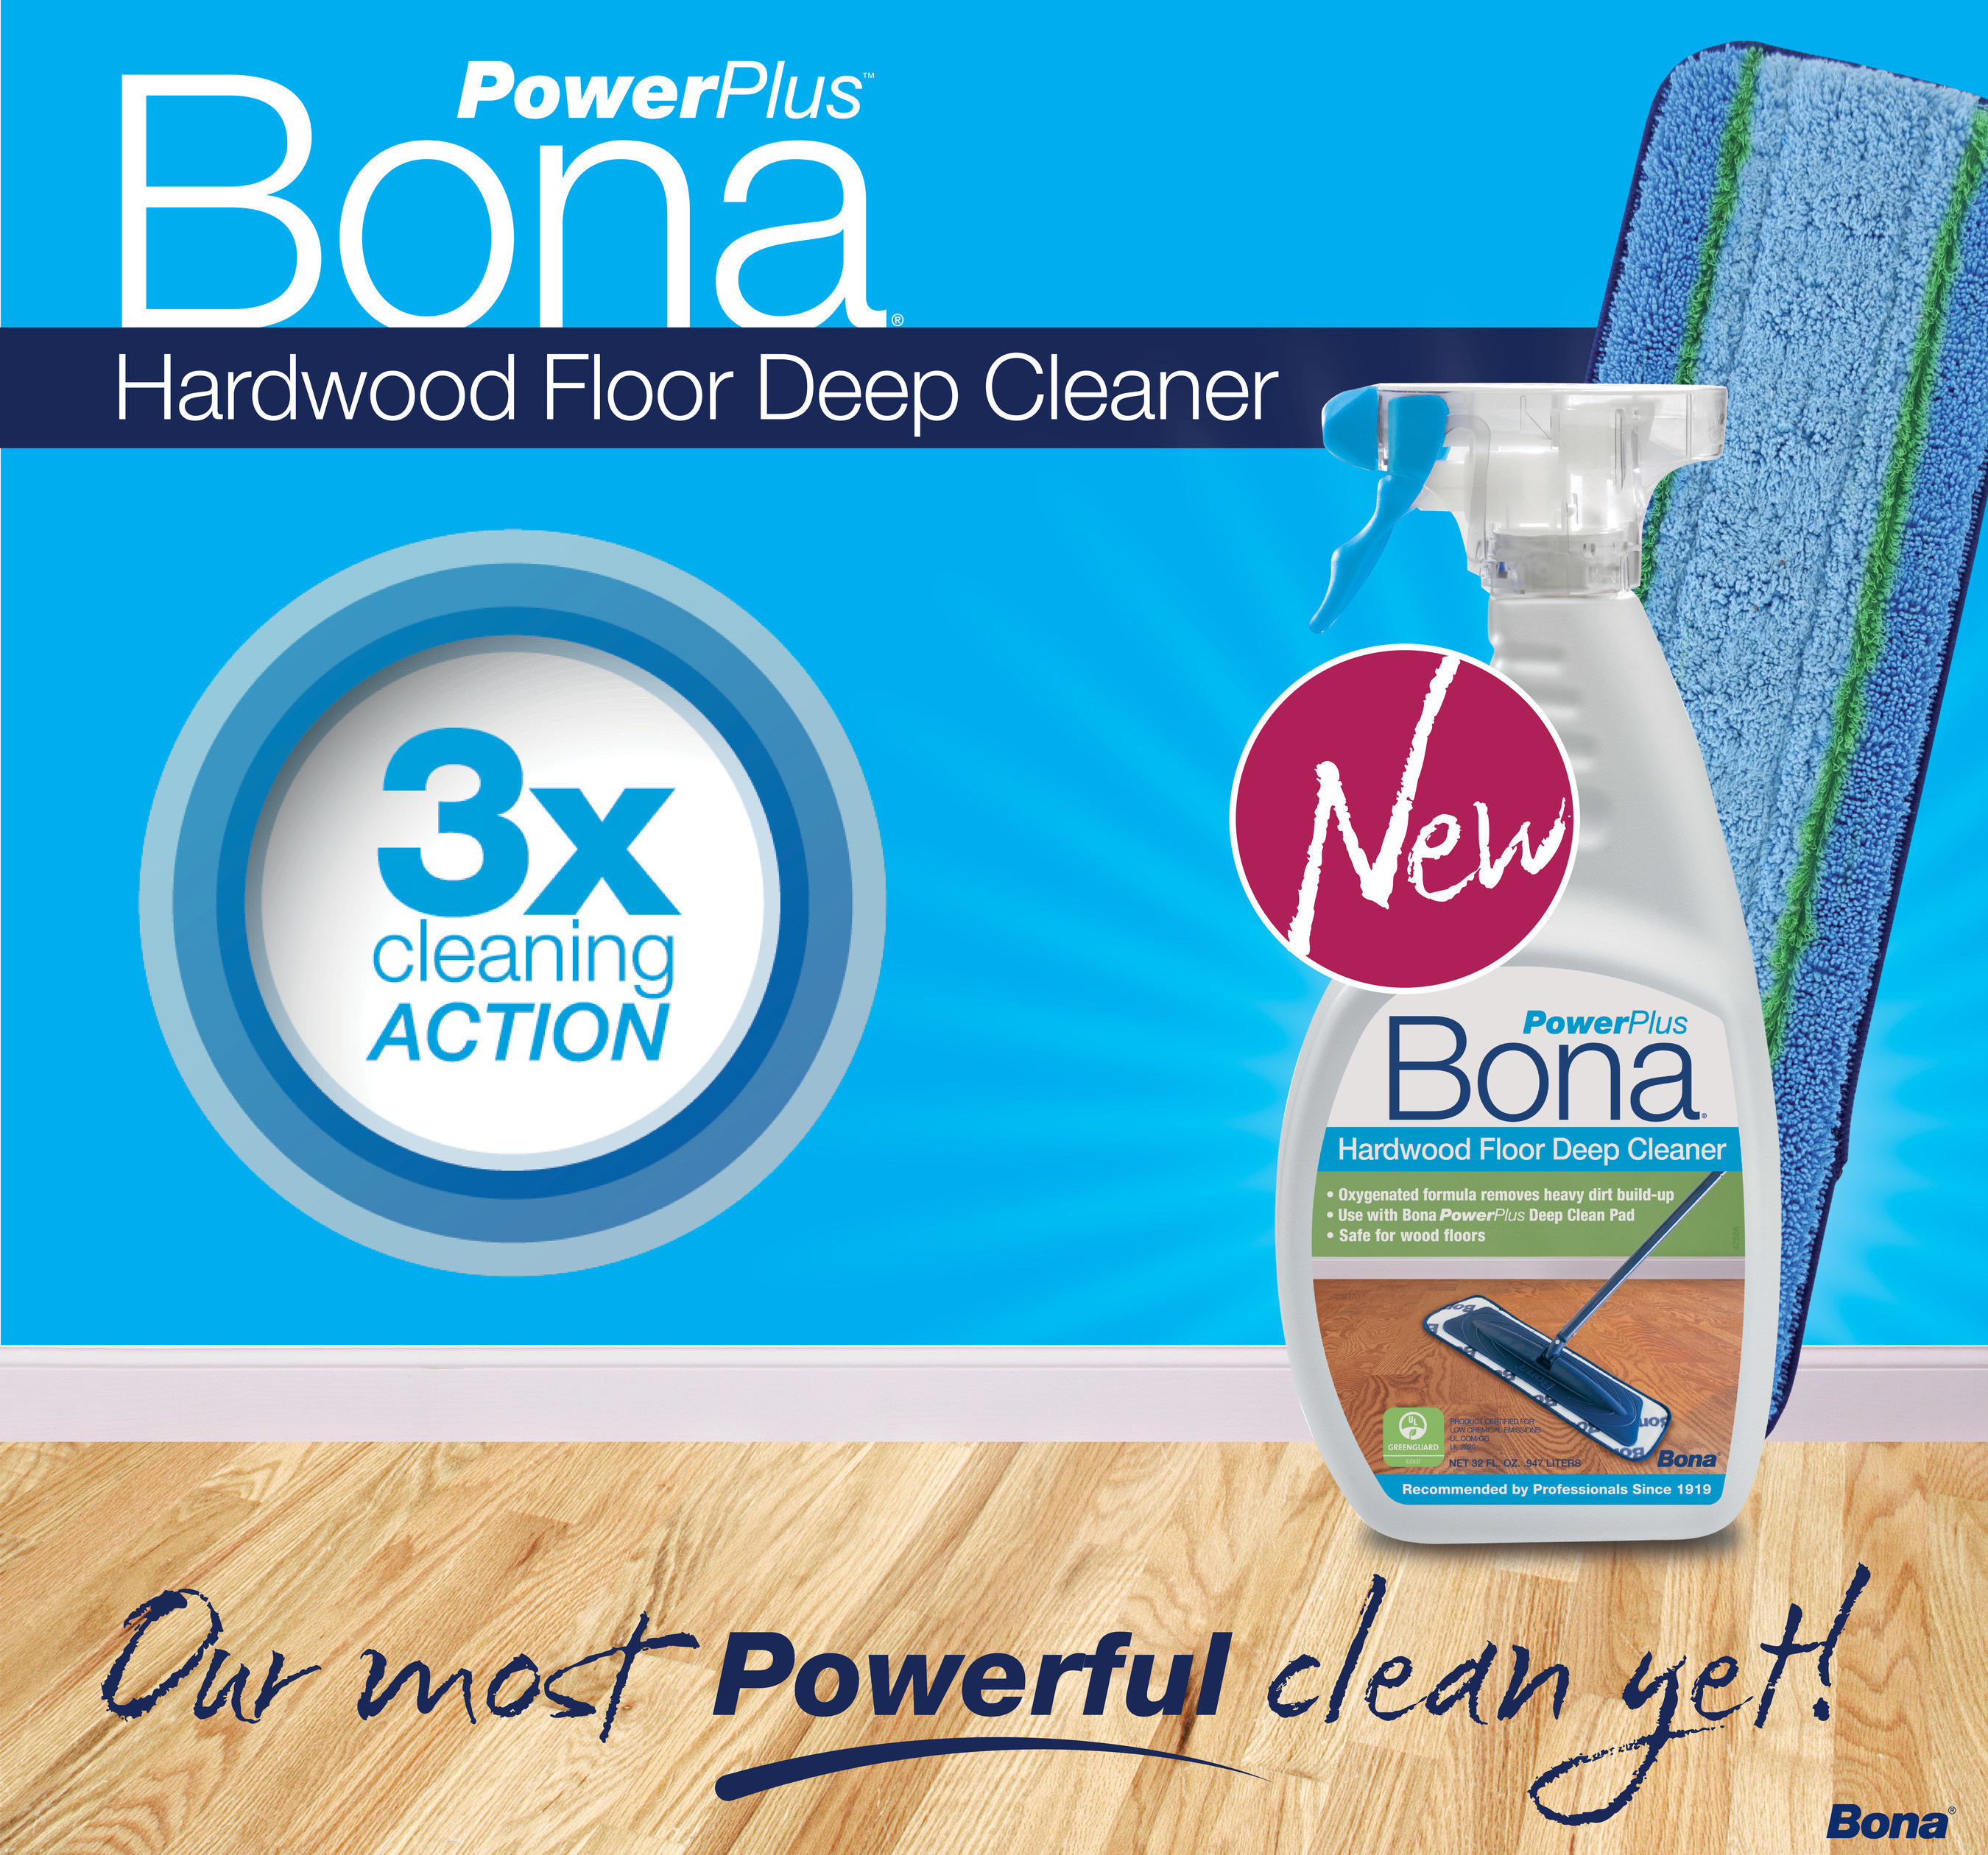 Bona(R) US Launches Bona PowerPlus(TM) Deep Clean, An Oxygenated Hardwood Floor Cleaning System